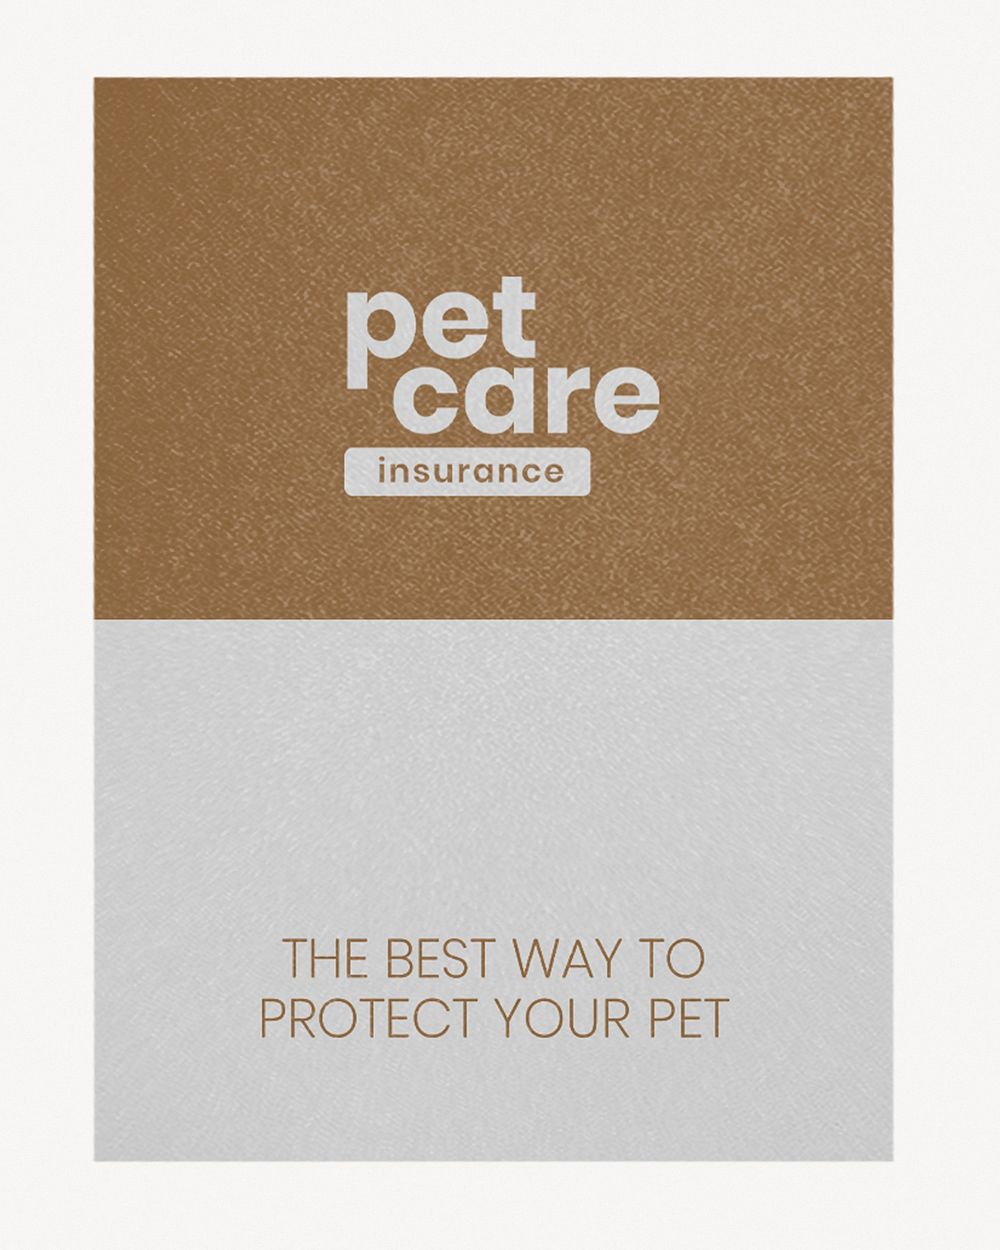 Pet insurance poster mockup, editable design psd